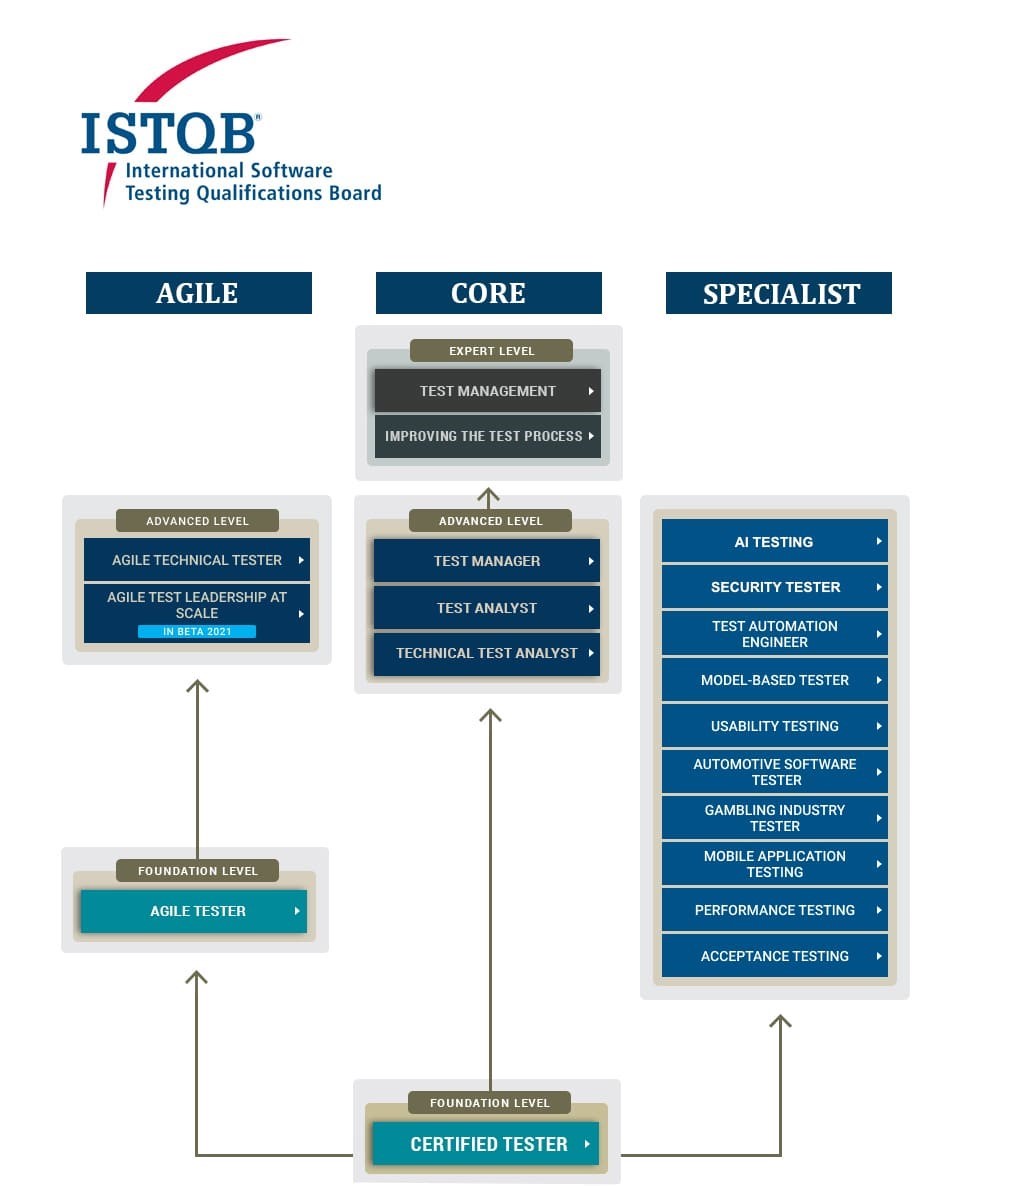 ISTQB certificate offer